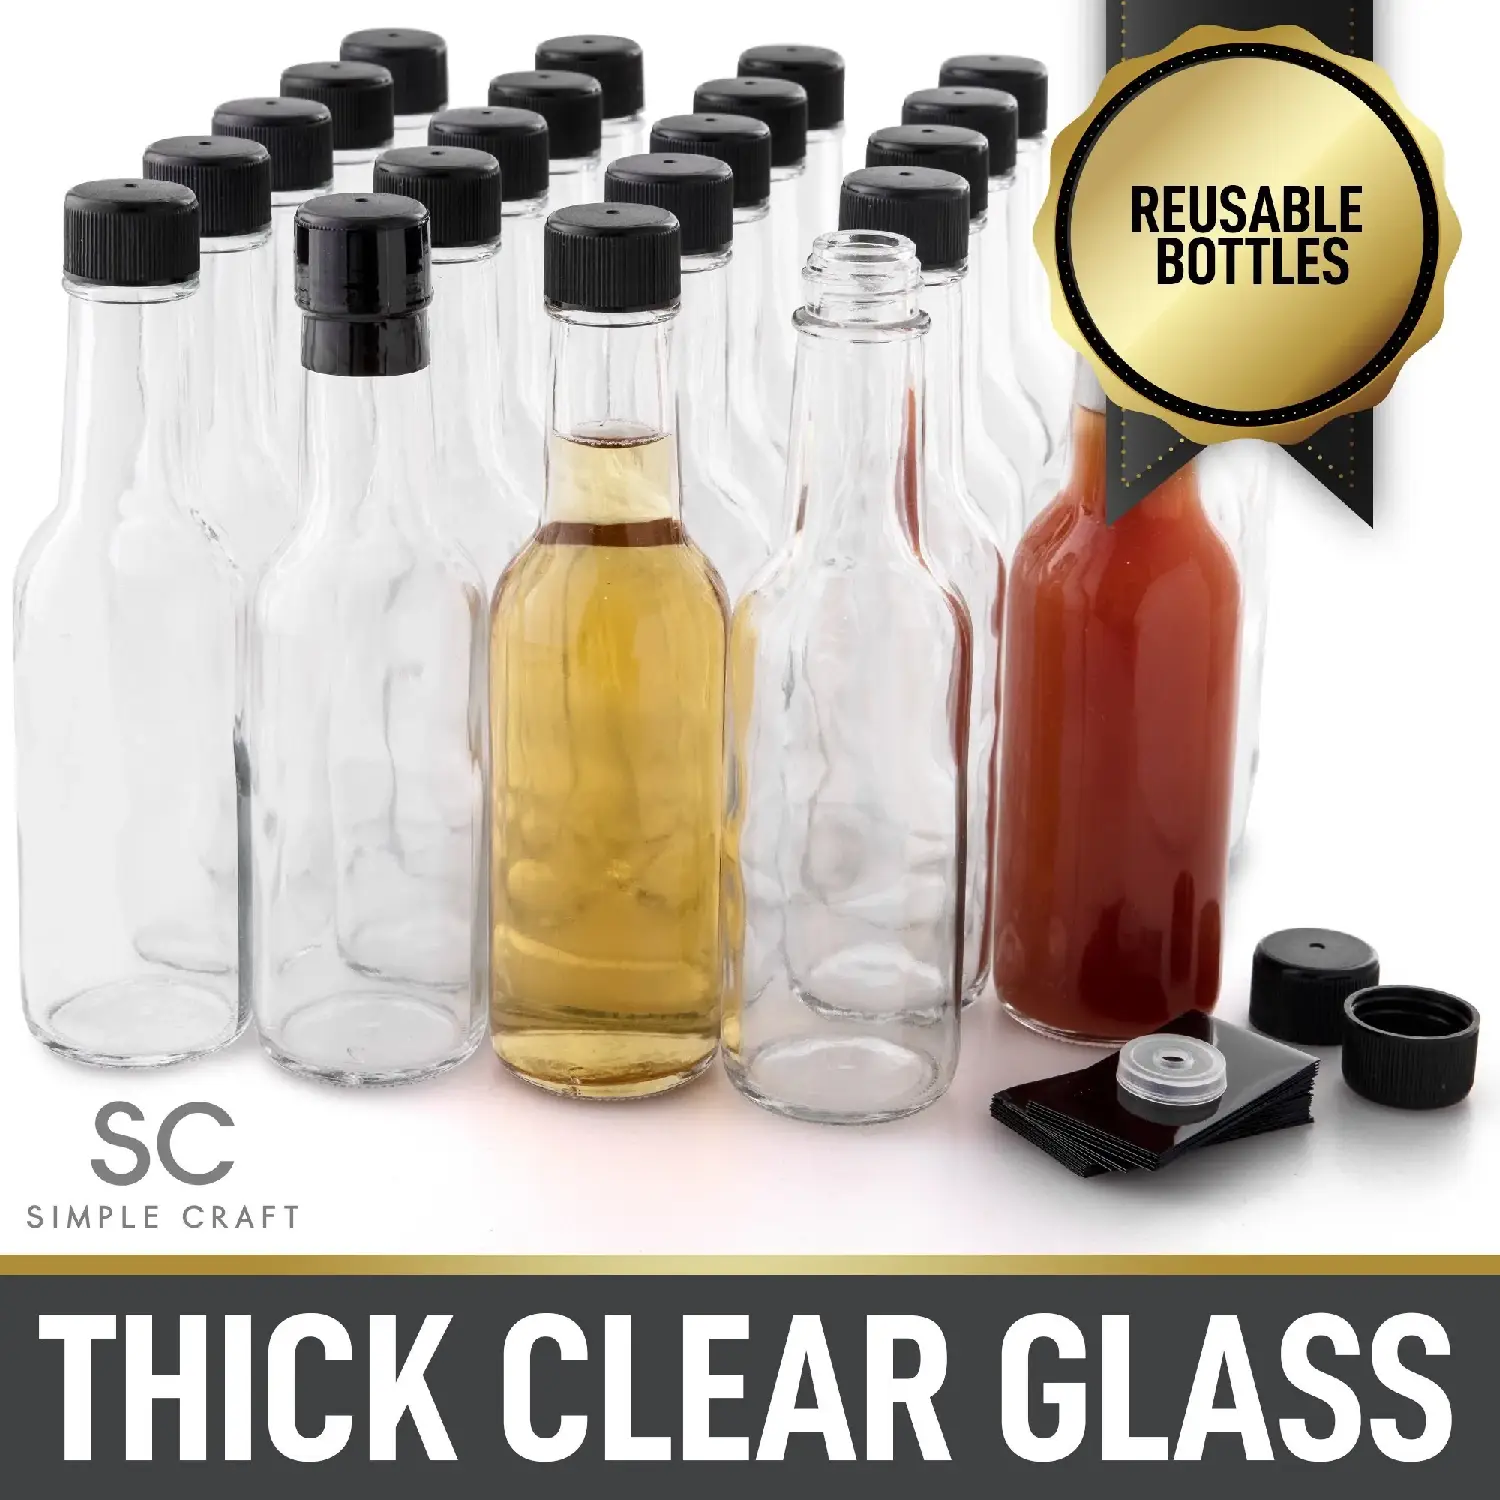 Simple Craft Hot Sauce Glass Bottles (5 Oz) - 24 Piece